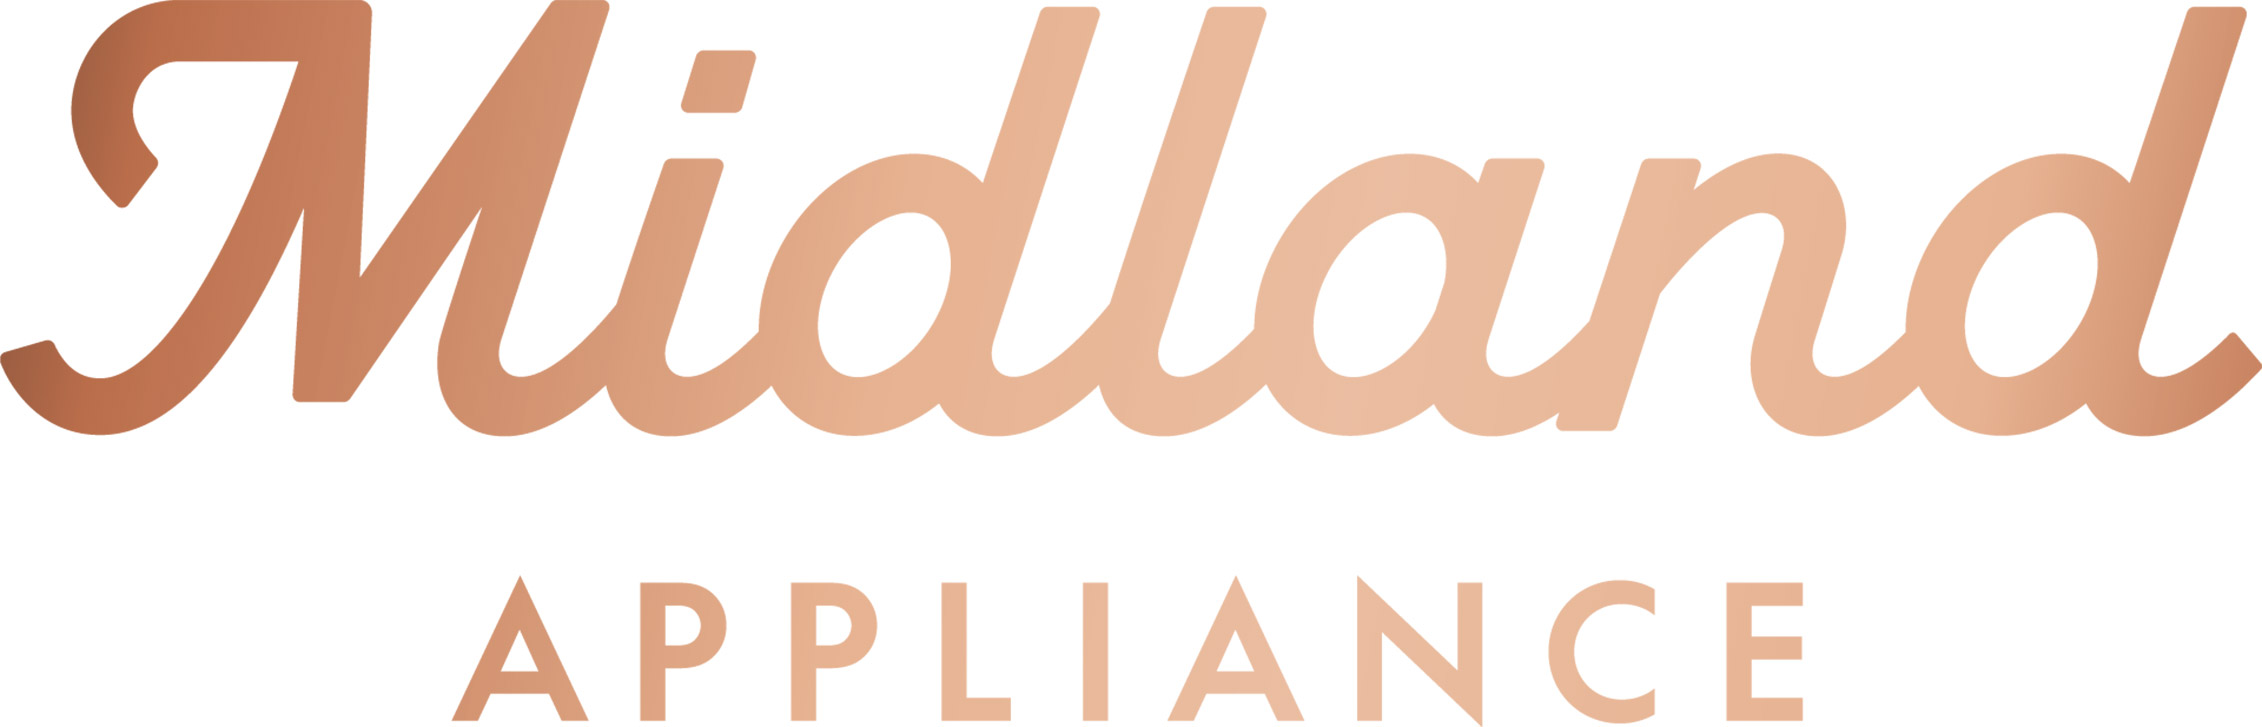 midland-logo